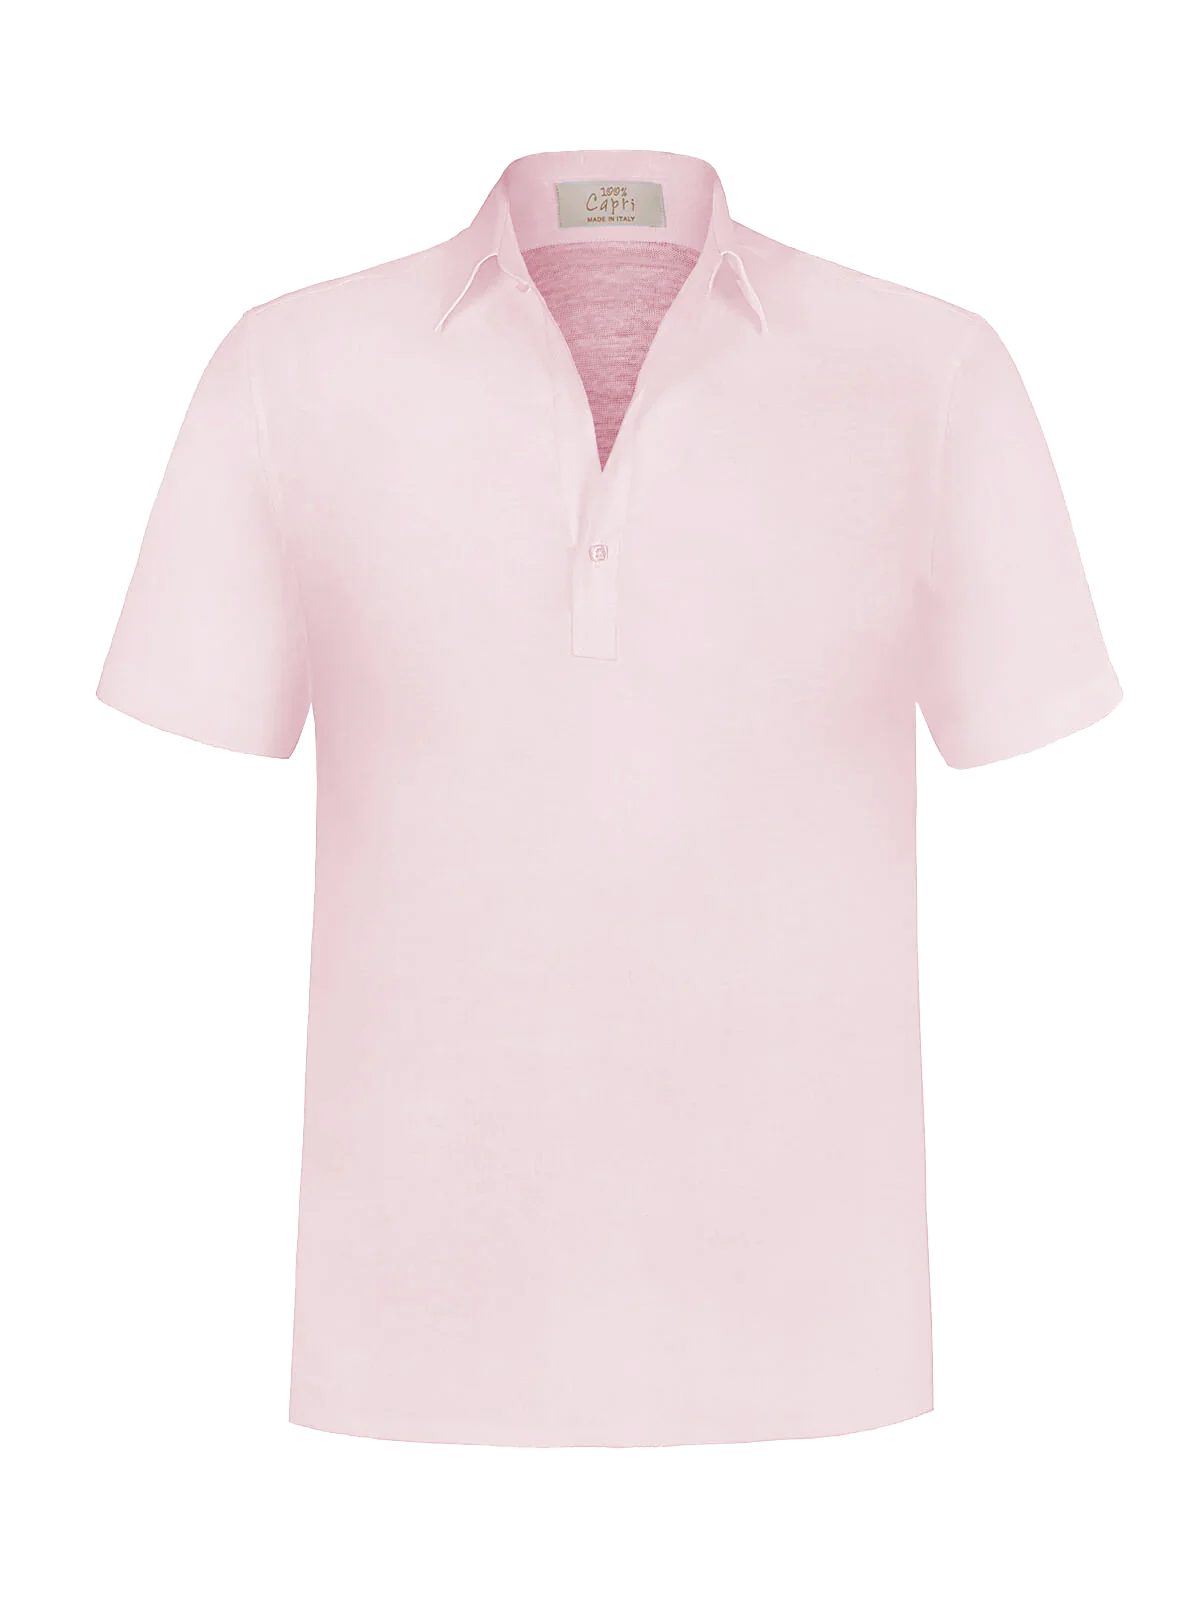 Camicia Portofino for man 100% Capri linen pink t-shirt front